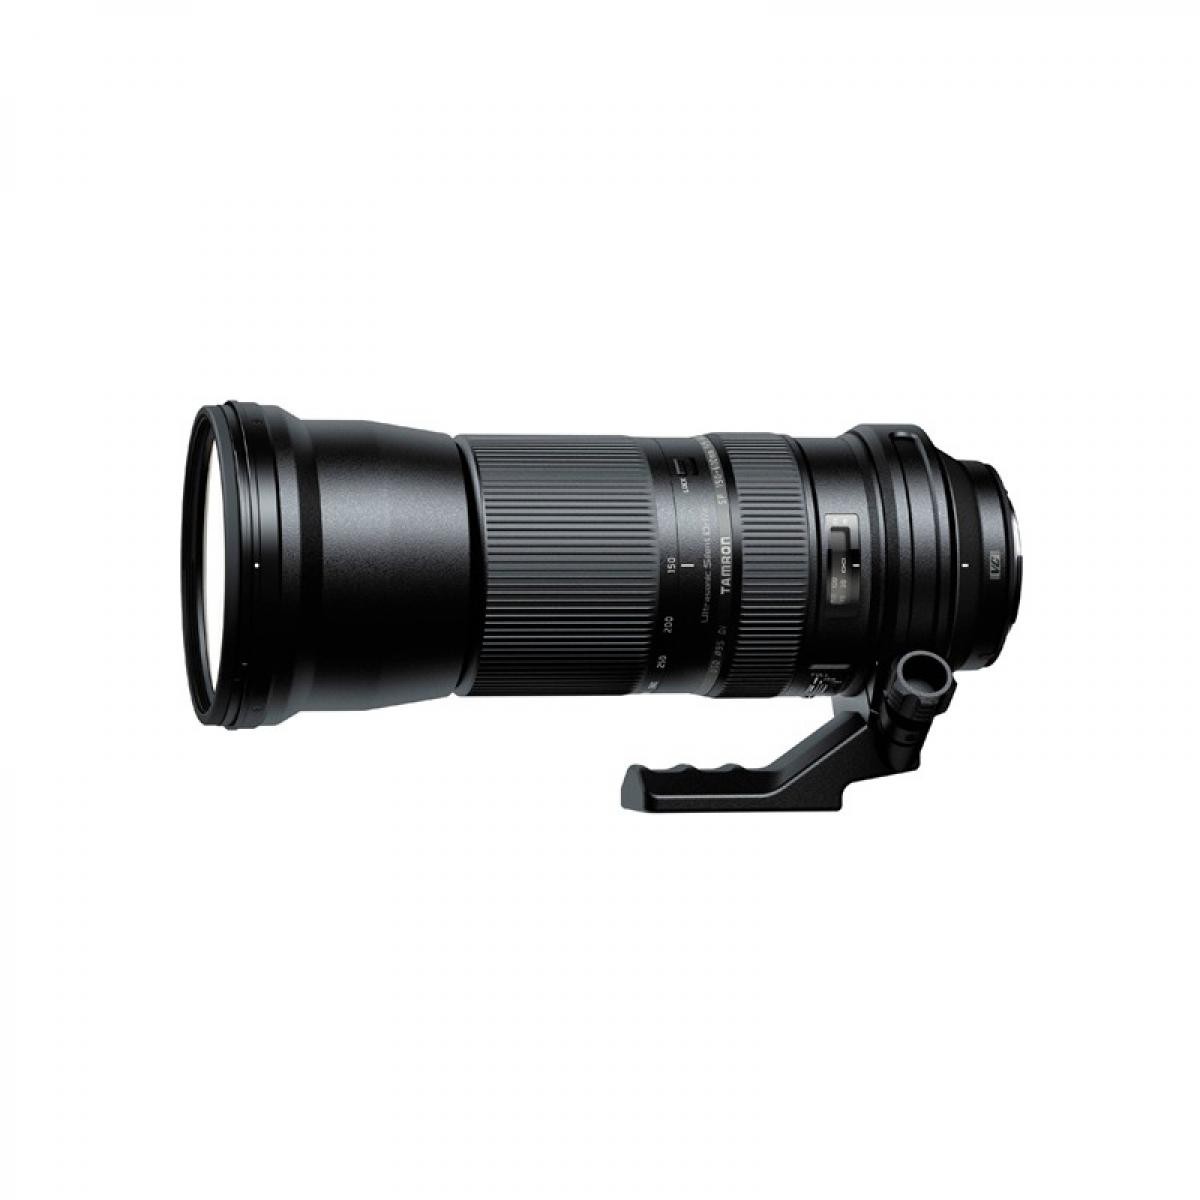 Tamron - TAMRON Objectif SP AF 150-600mm f/5-6.3 Di VC USD compatible avec Nikon Garanti 2 ans - Objectif Photo